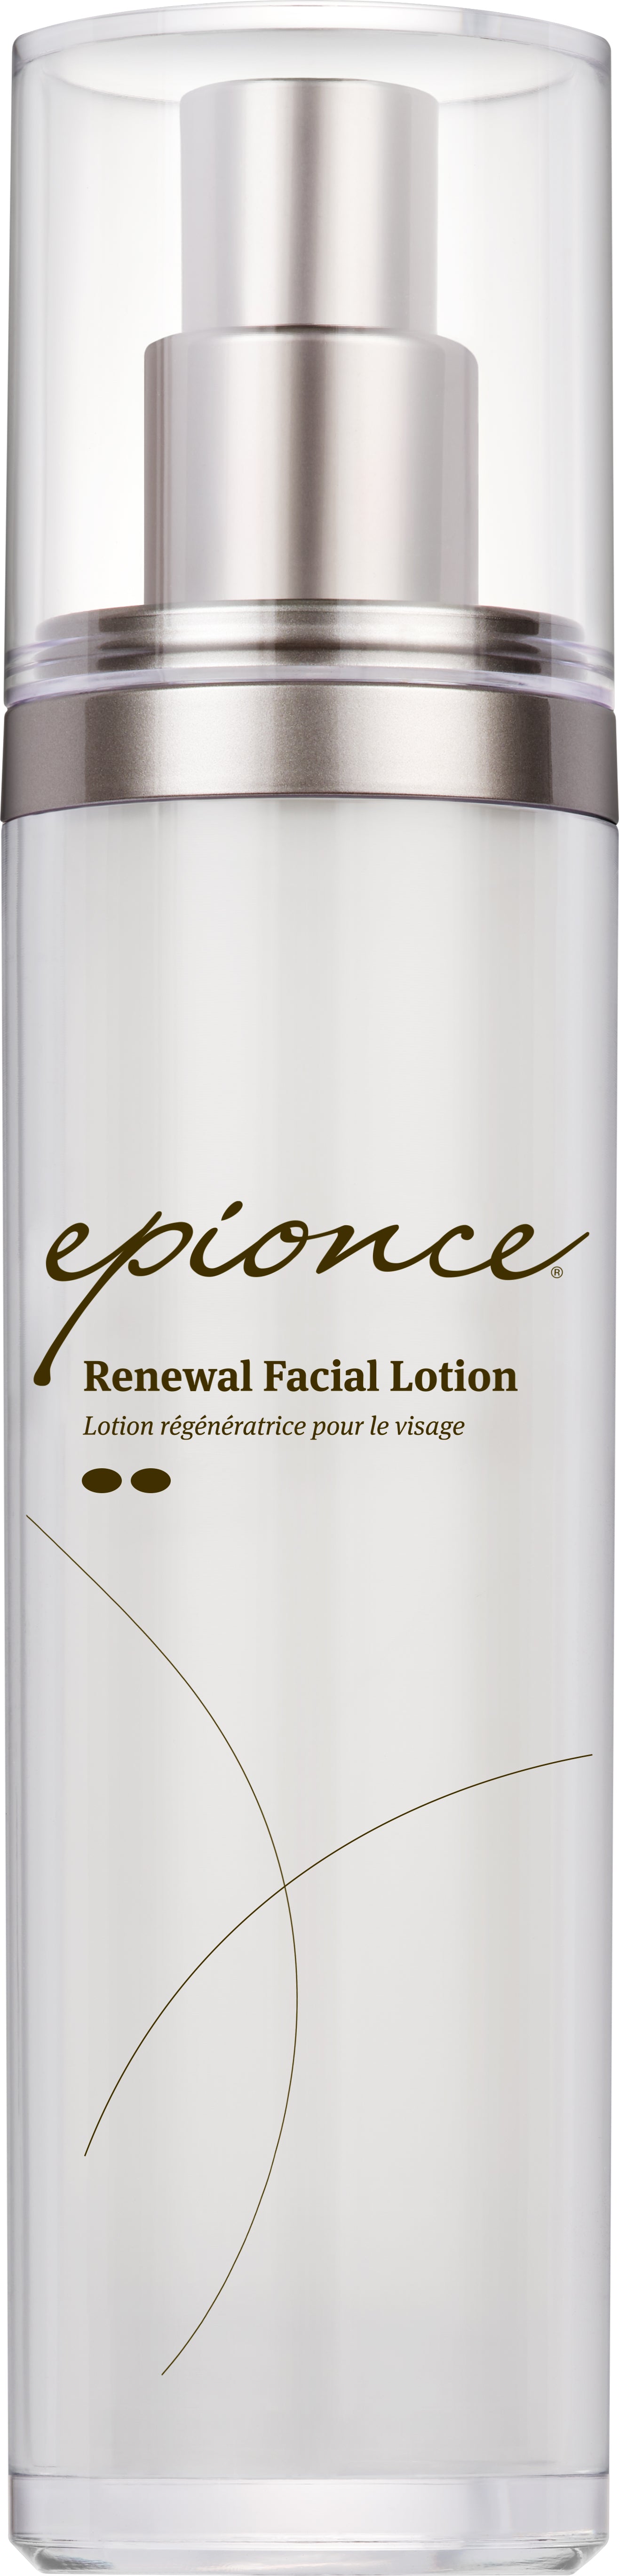 Epionce | Renewal Facial Lotion (50ml)